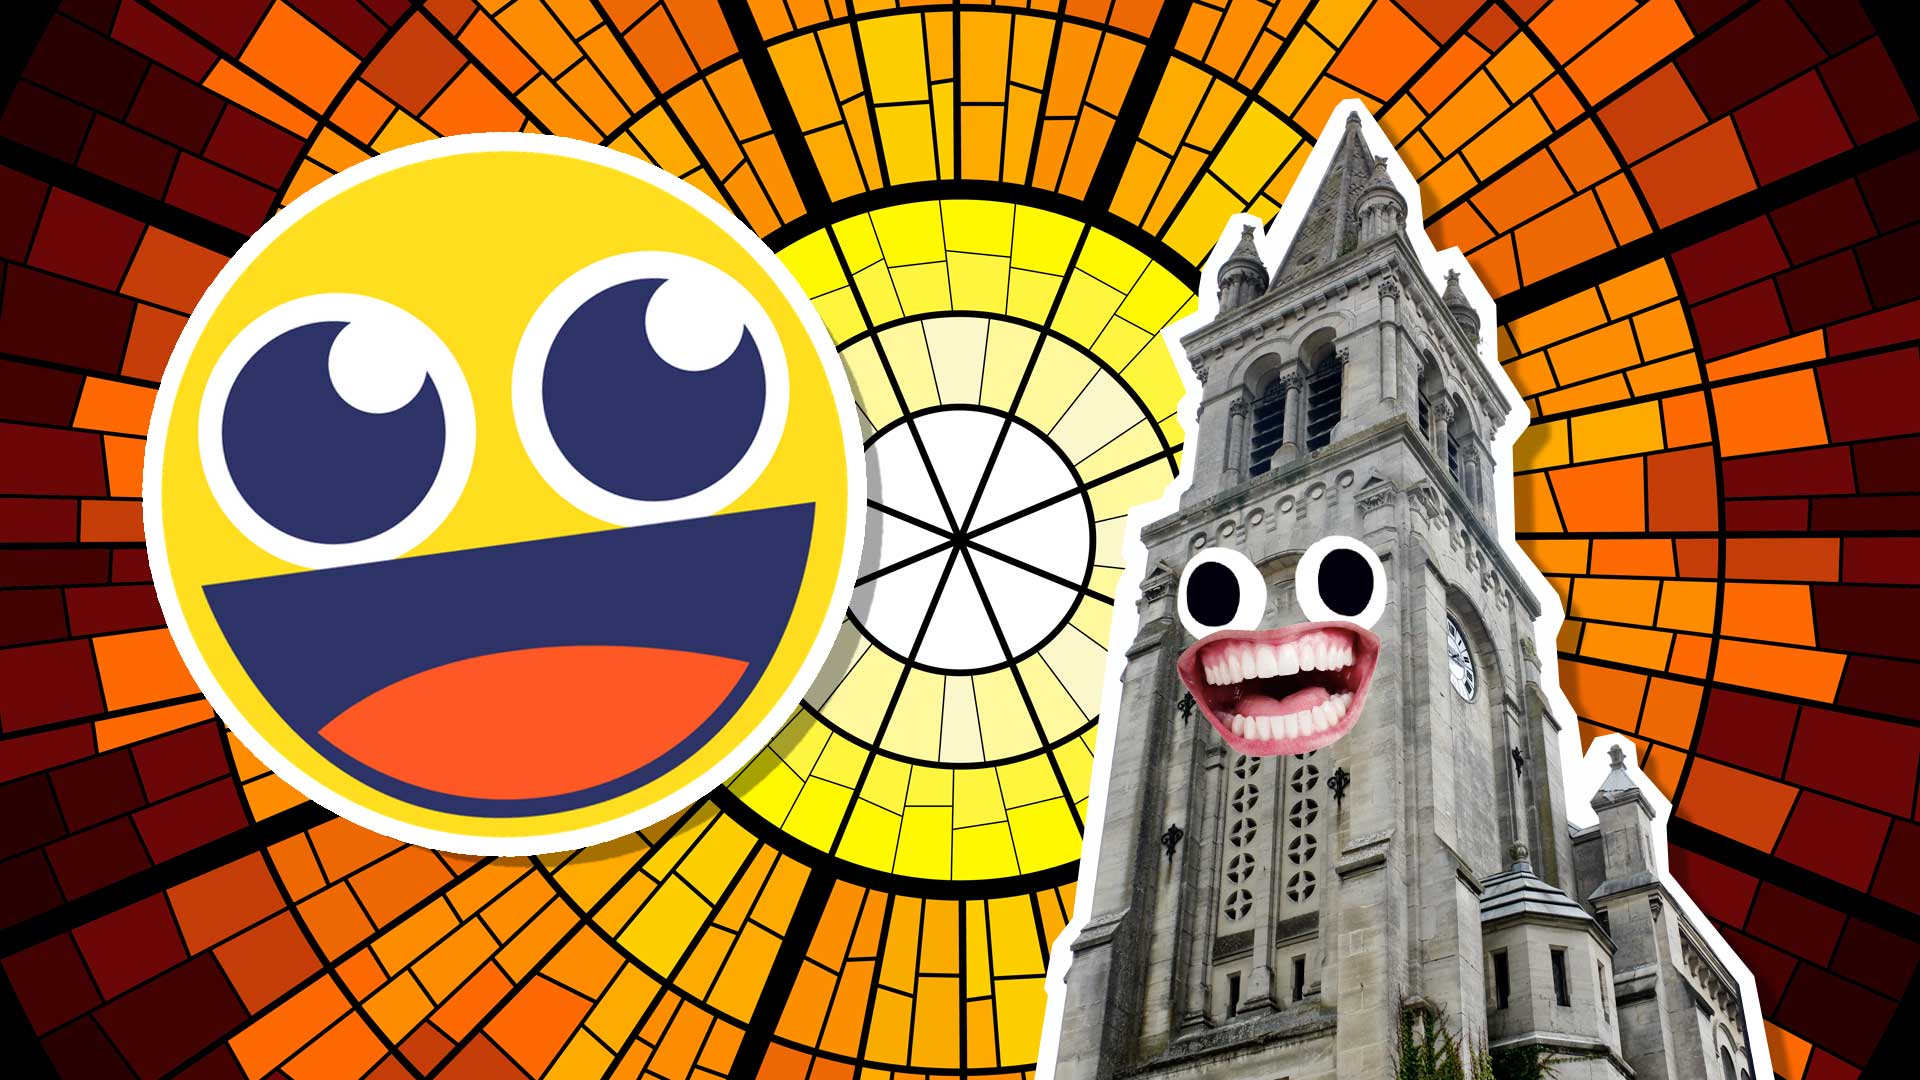 A happy church and a smiling emoji